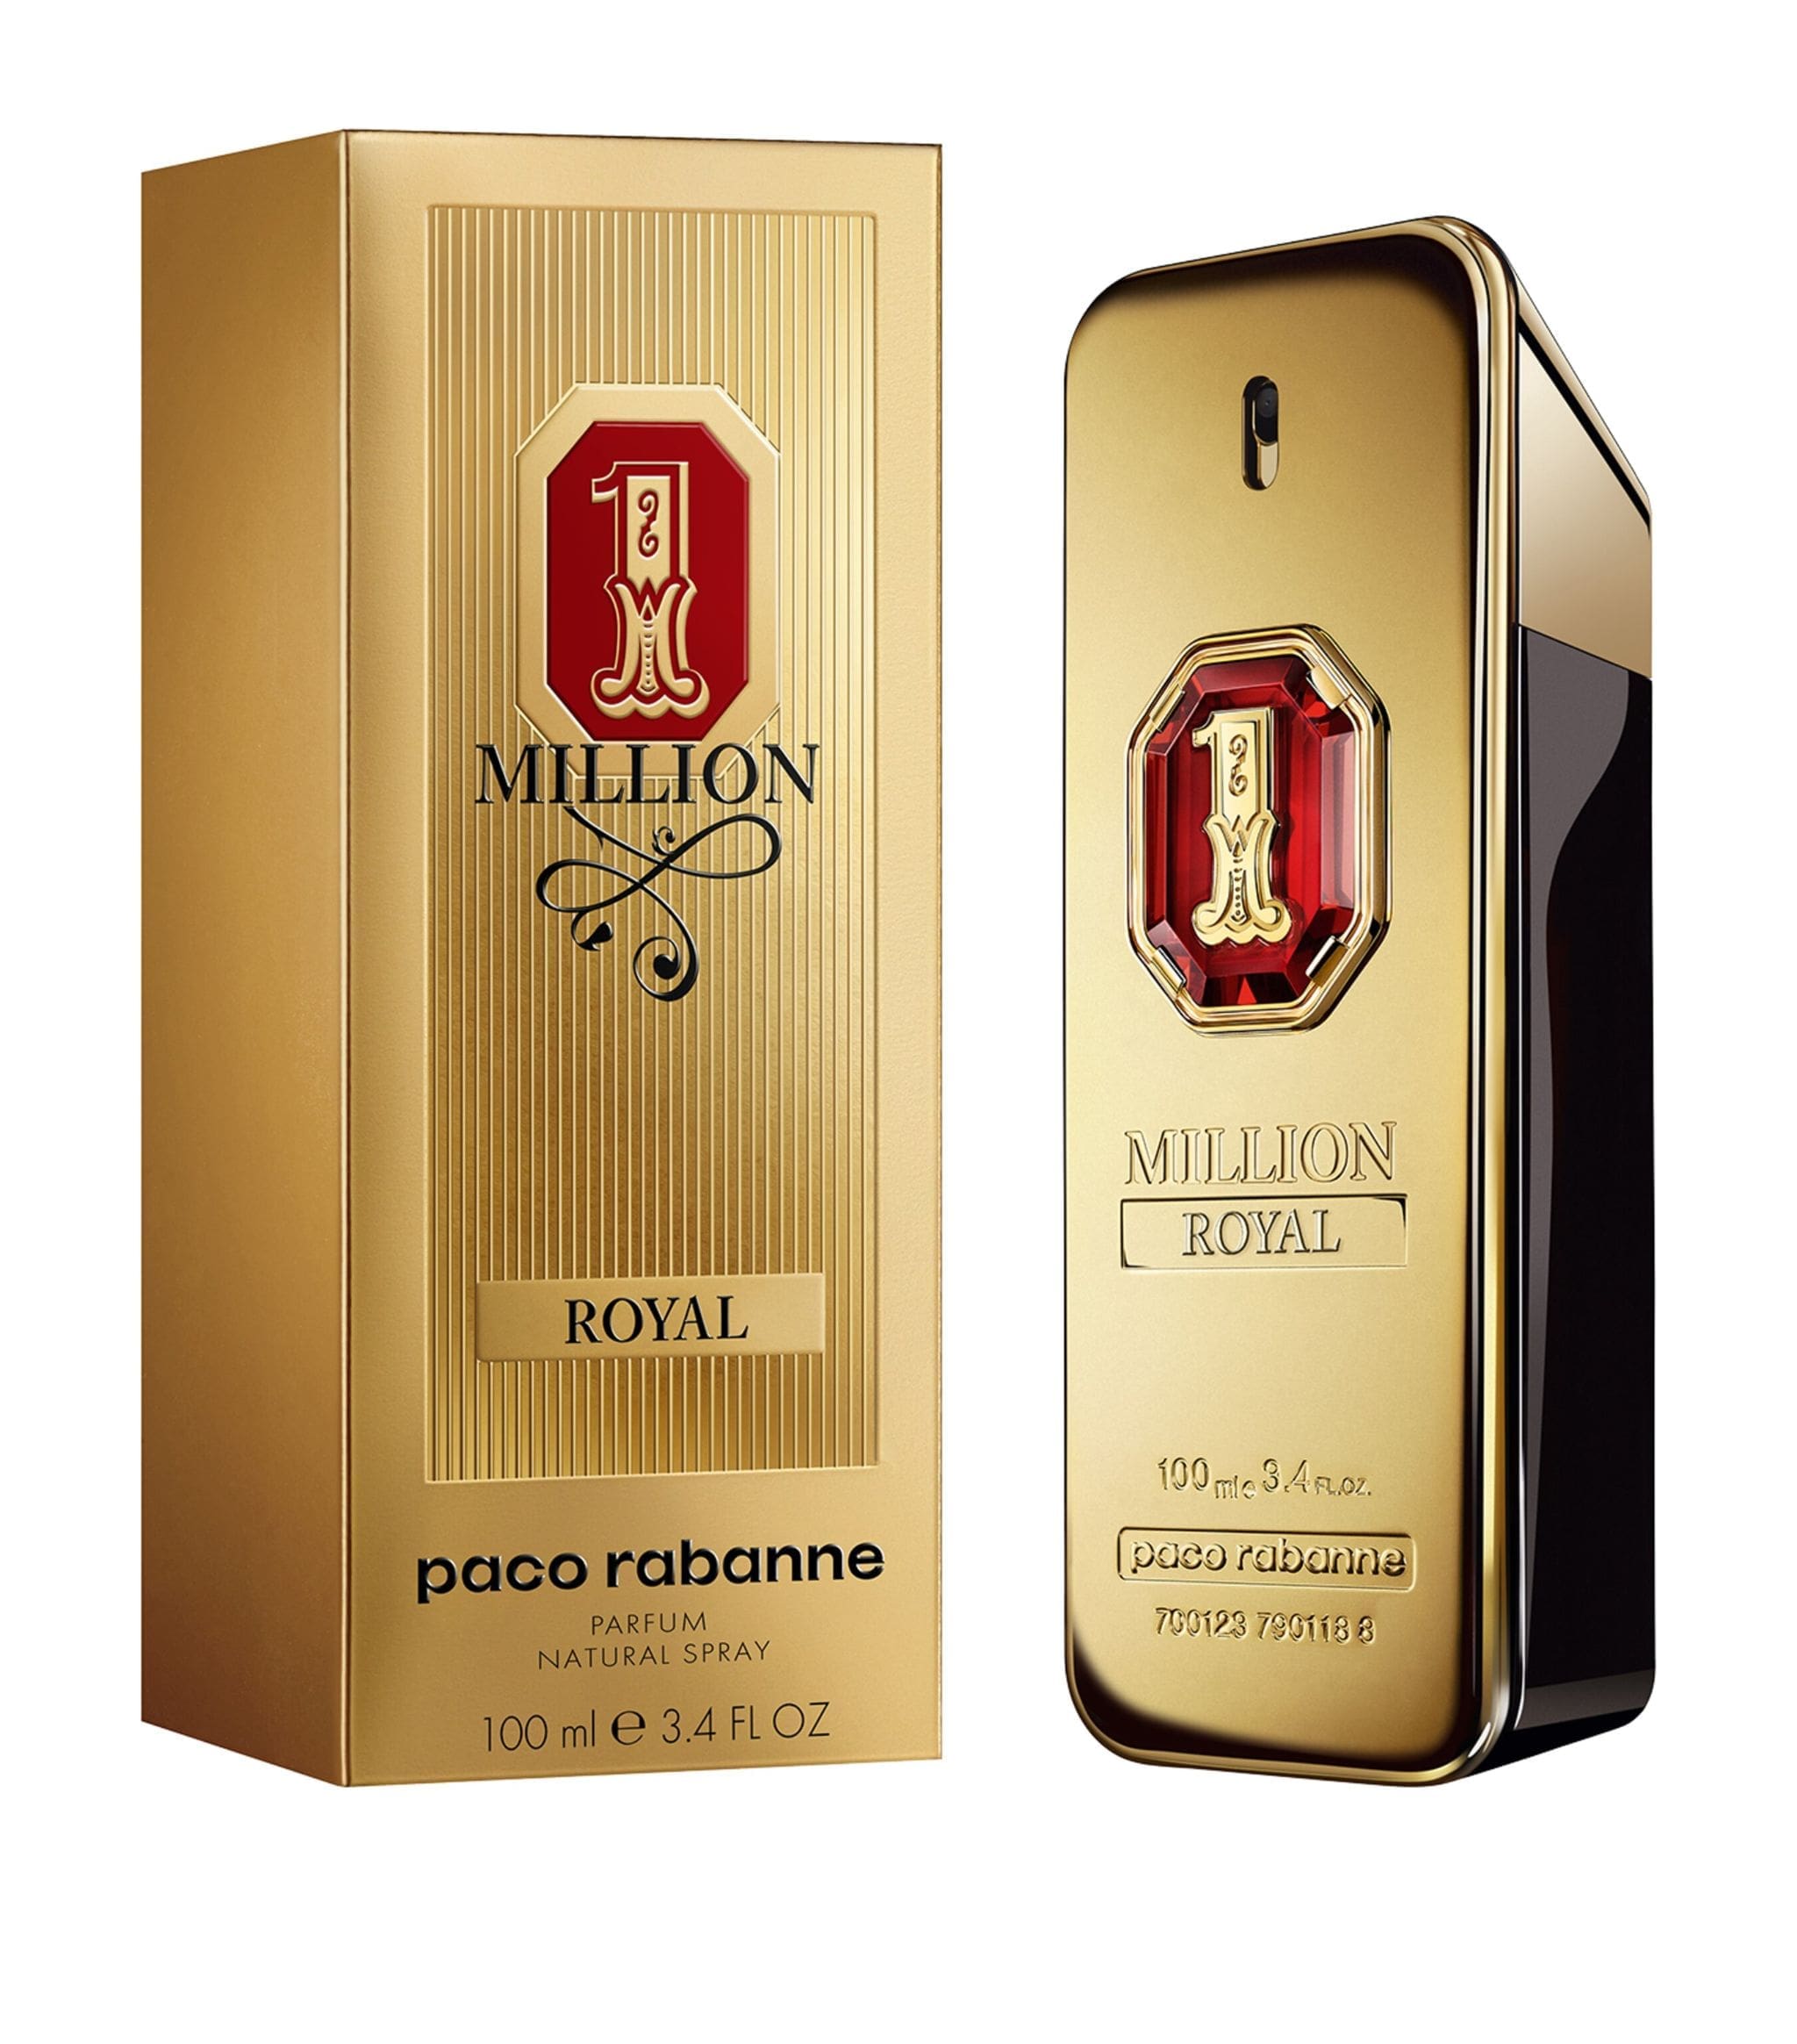 3749 Paco rabanne ROYAL 100ml perfume